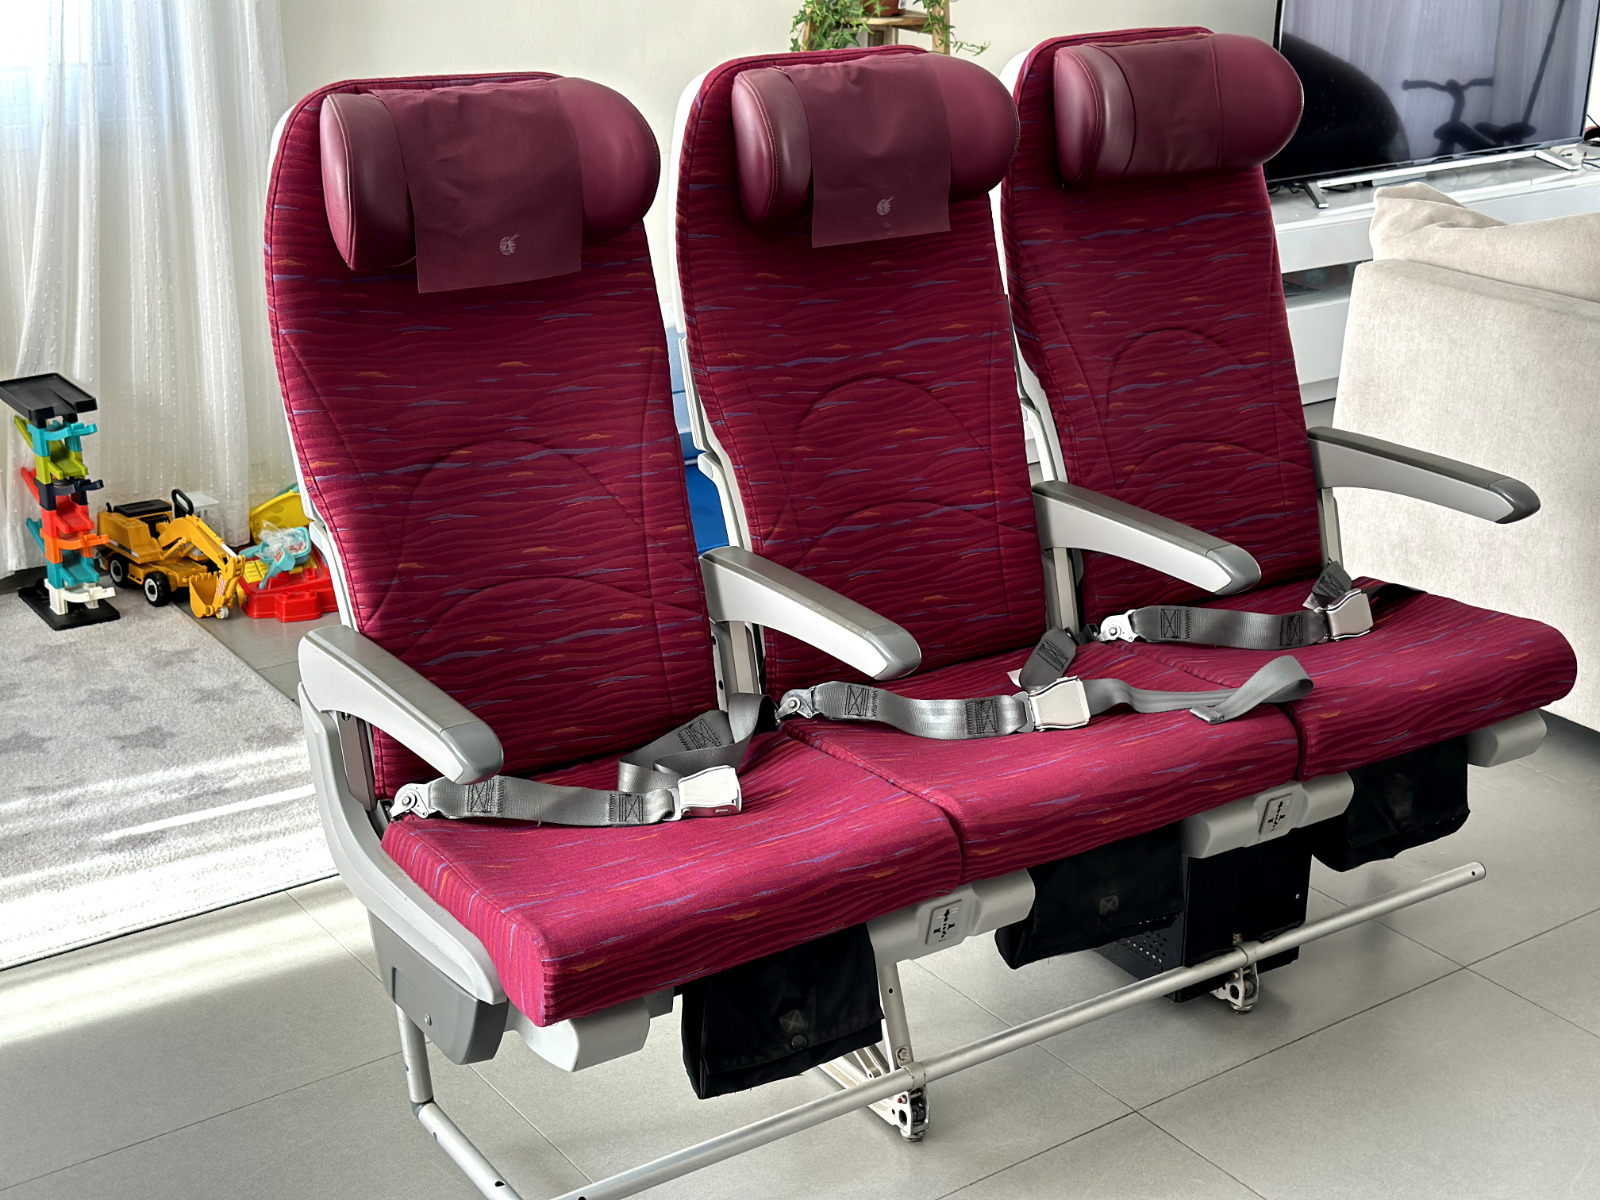 Airbus A321 Qatar Airways Economy class seats